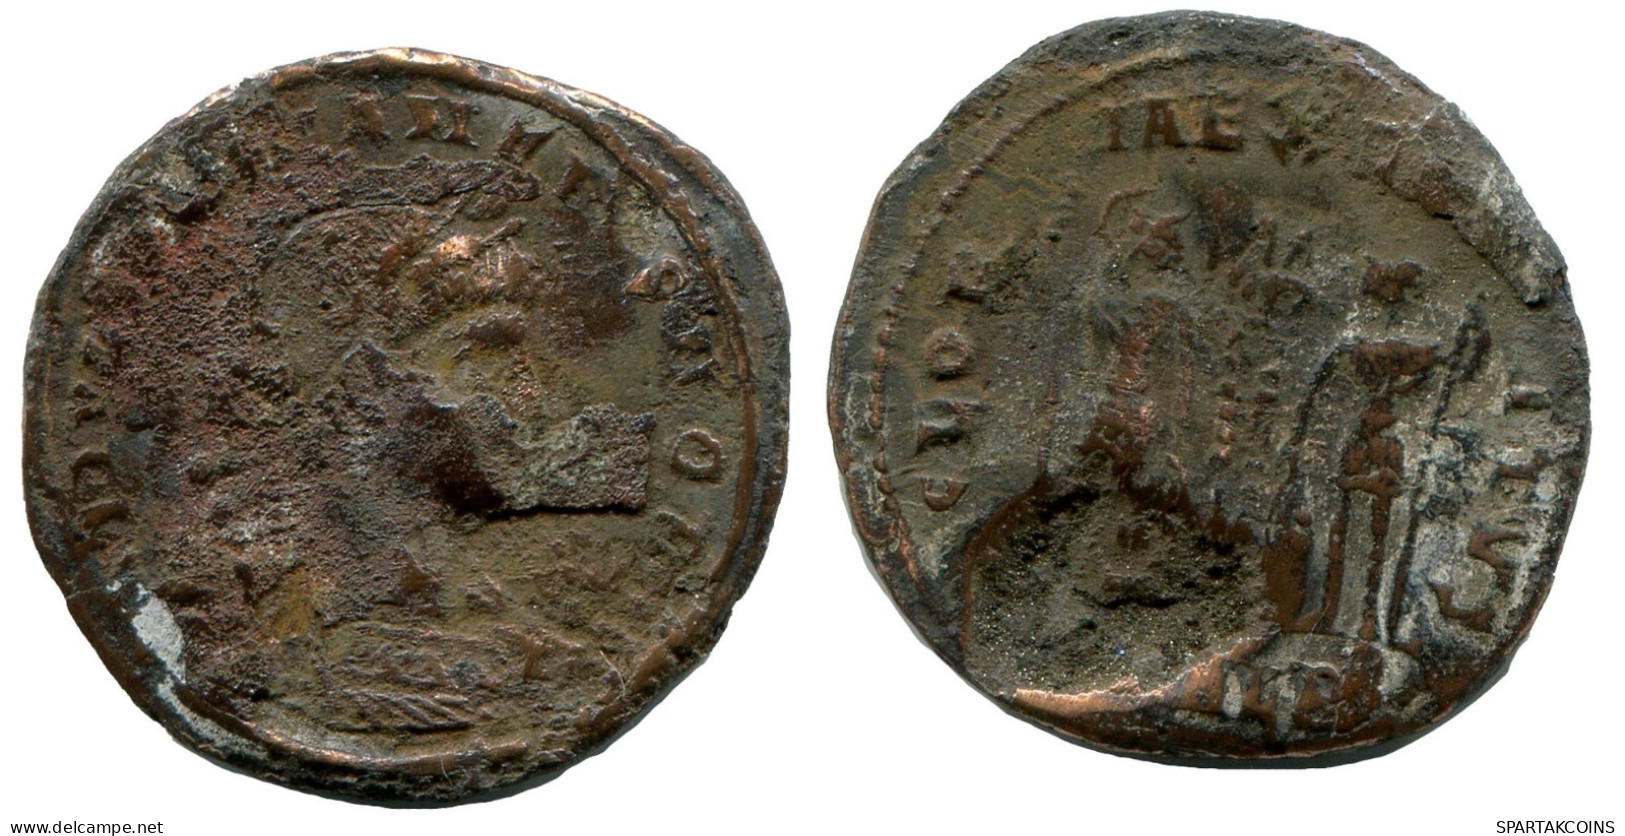 CONSTANTIUS II ALEKSANDRIA FROM THE ROYAL ONTARIO MUSEUM #ANC10448.14.D.A - Der Christlischen Kaiser (307 / 363)